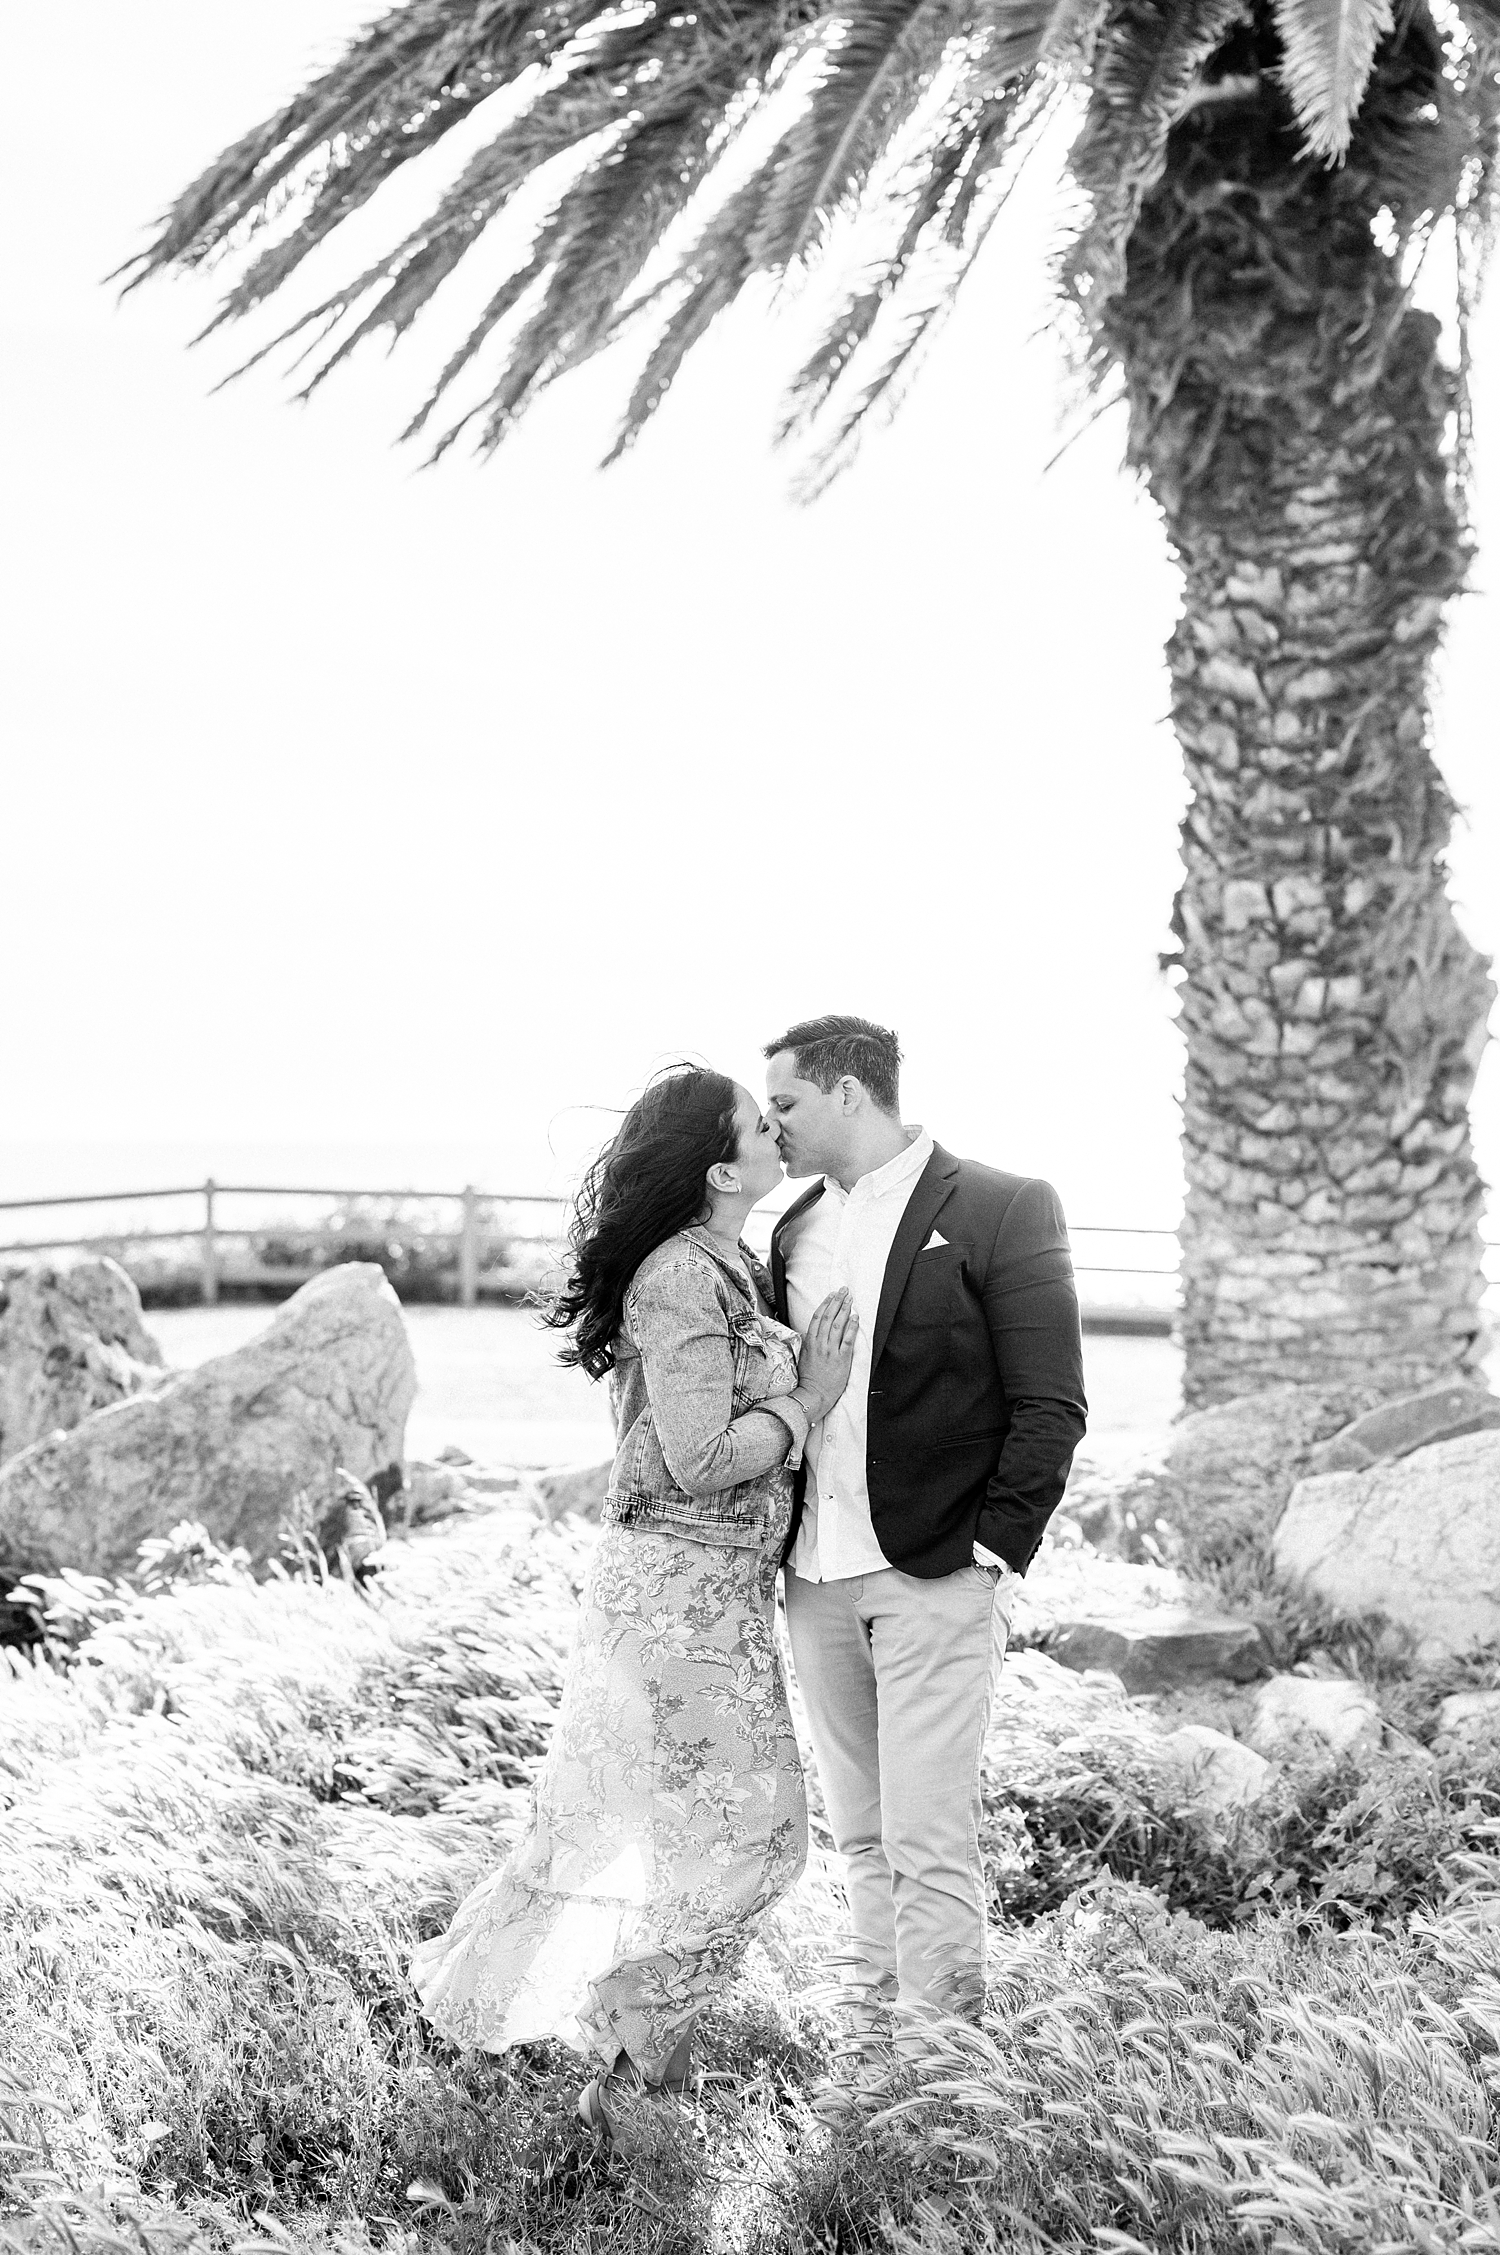 Palos Verdes Lighthouse Engagement Photos at Sunset | Wedding Photographer -12.jpg